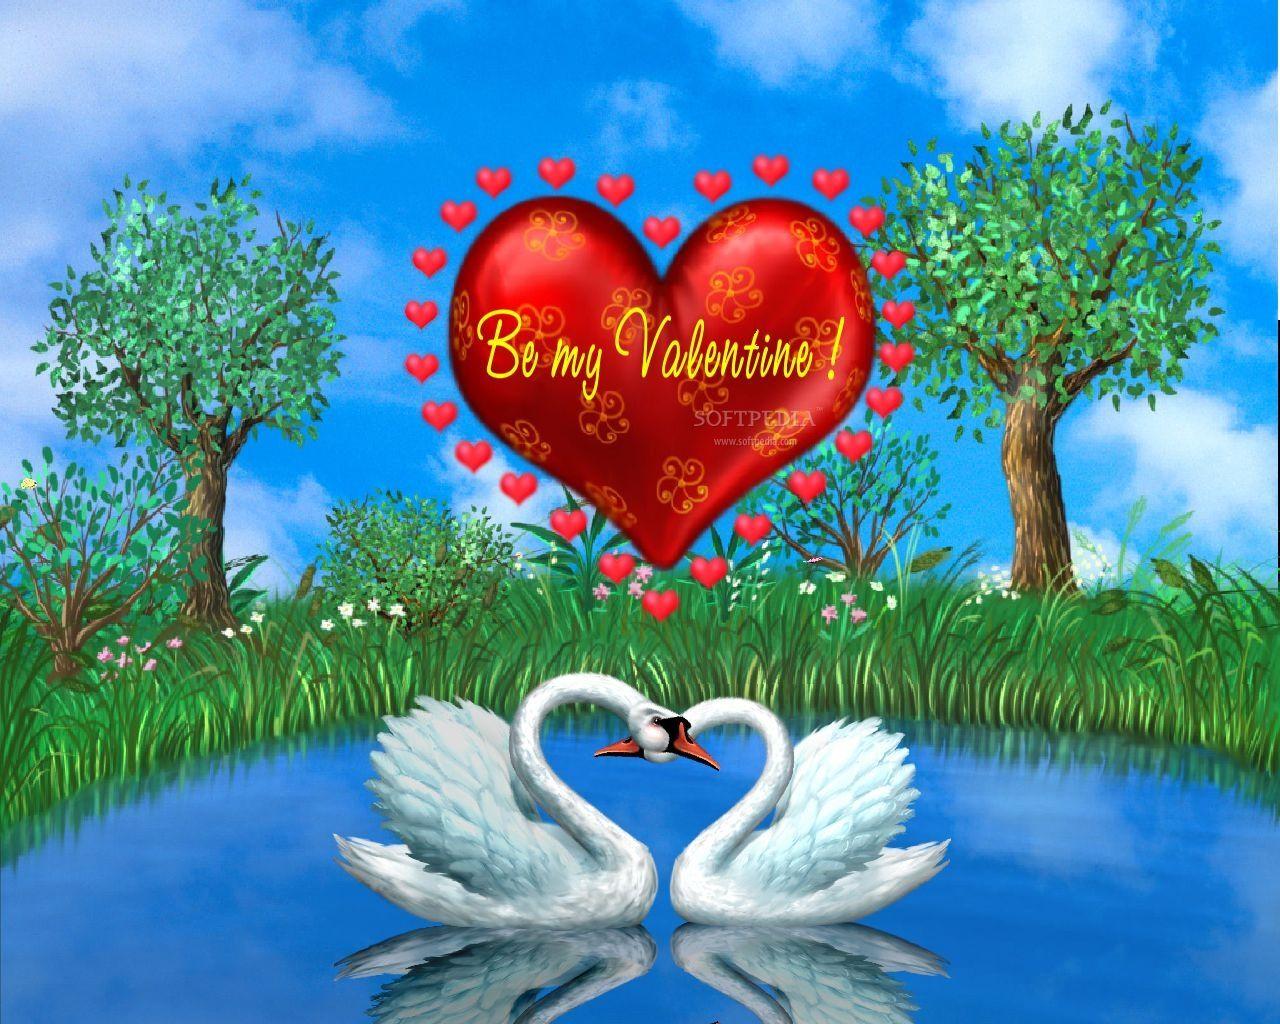 New Love Animated Wallpaper for Desktop Gallery Wallpaper HD